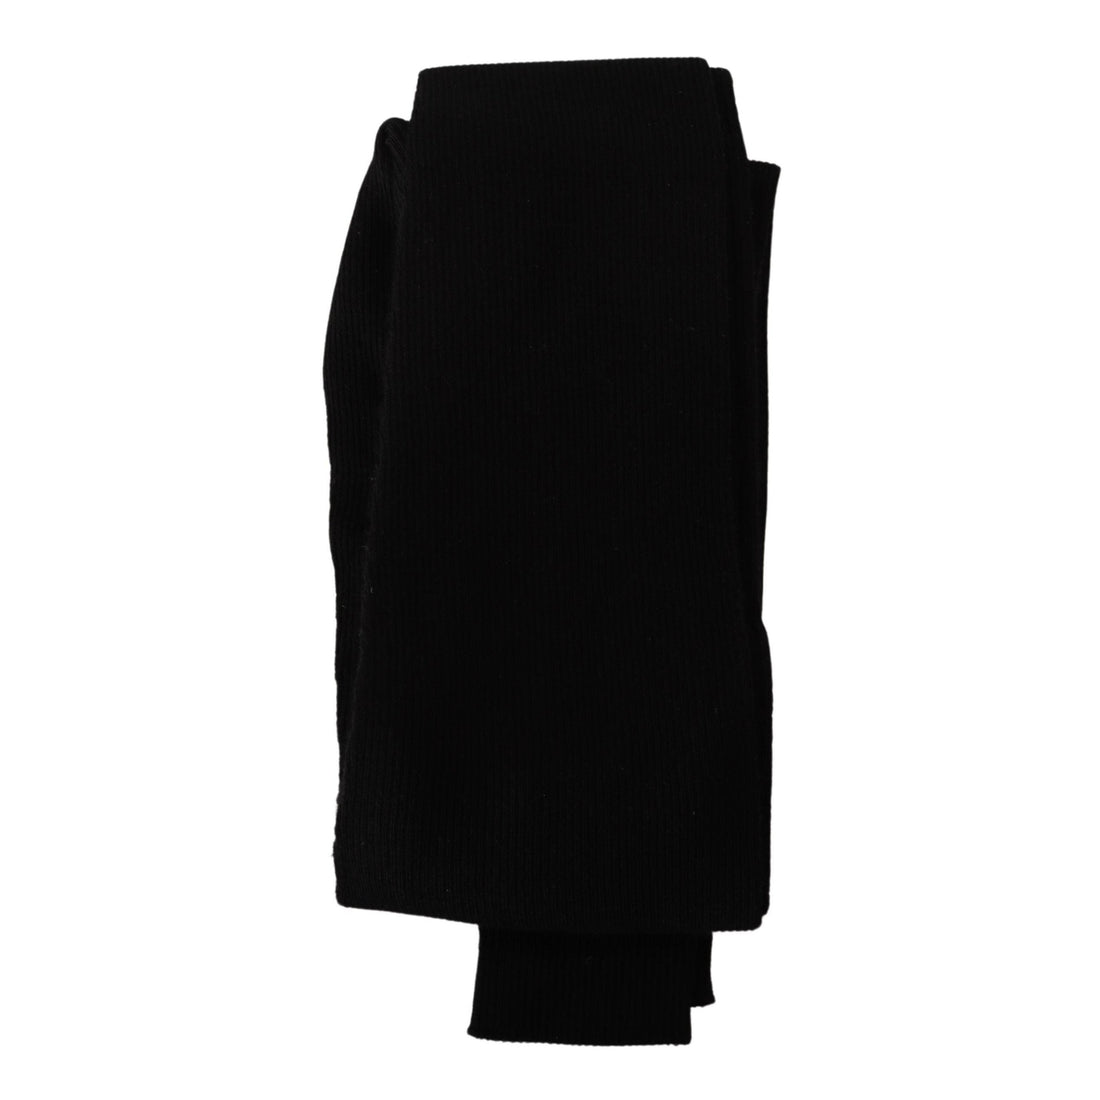 Dolce & Gabbana Black 100% Cashmere Tights Stocking Socks